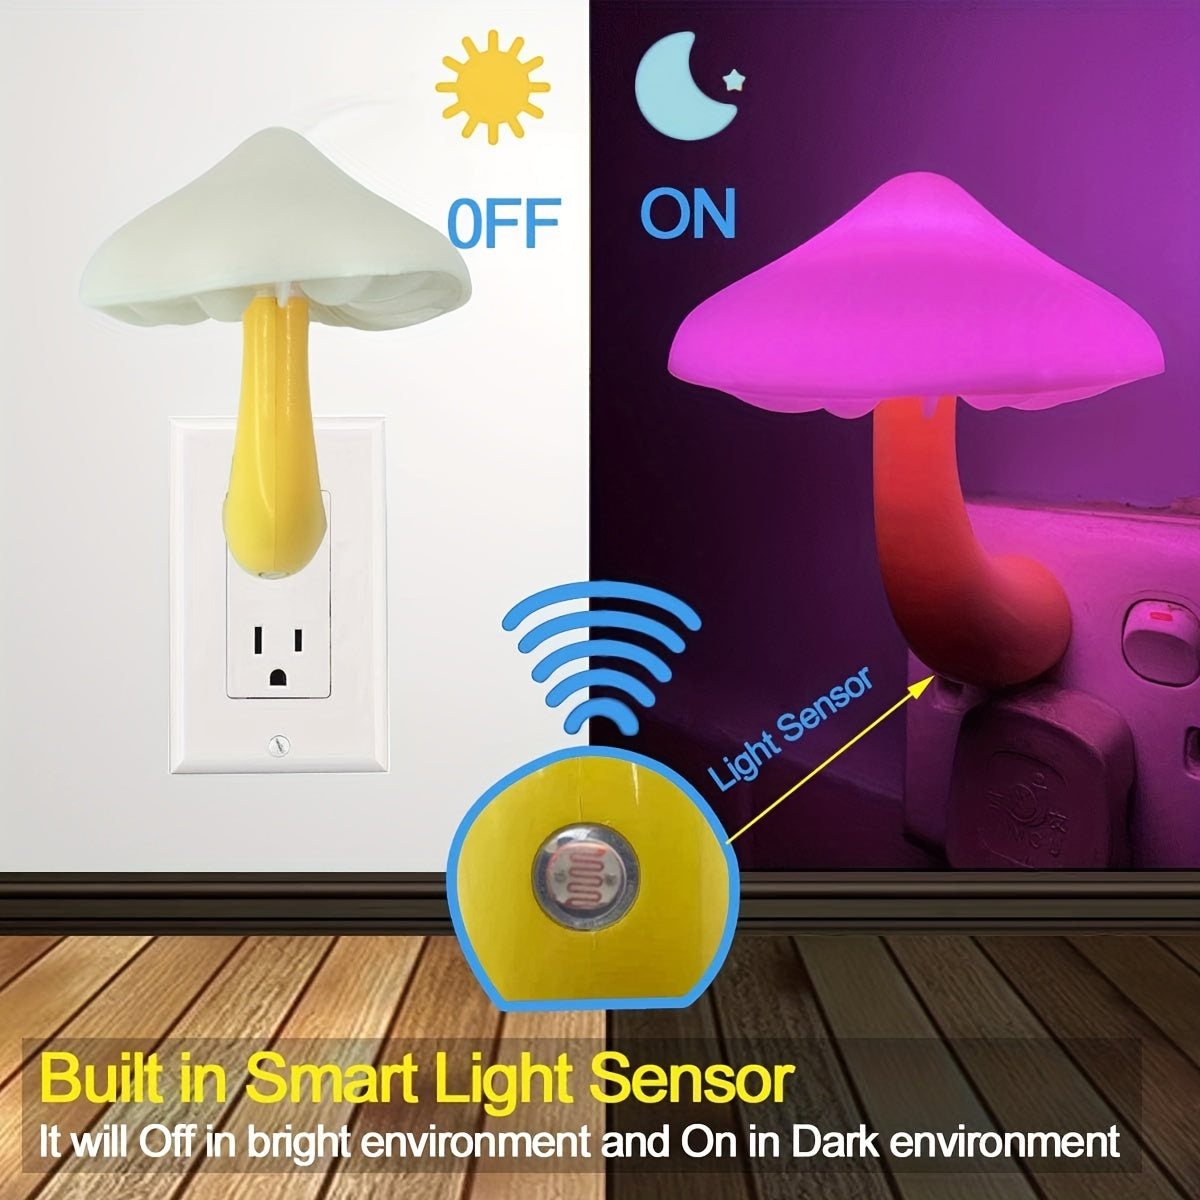 3 Packs Of UTLK Plug-In LED Mushroom Night Lights - 7 Colors & Dusk To Dawn Sensor - Perfect For Kids & Bedrooms! Halloween/Christmas Gift